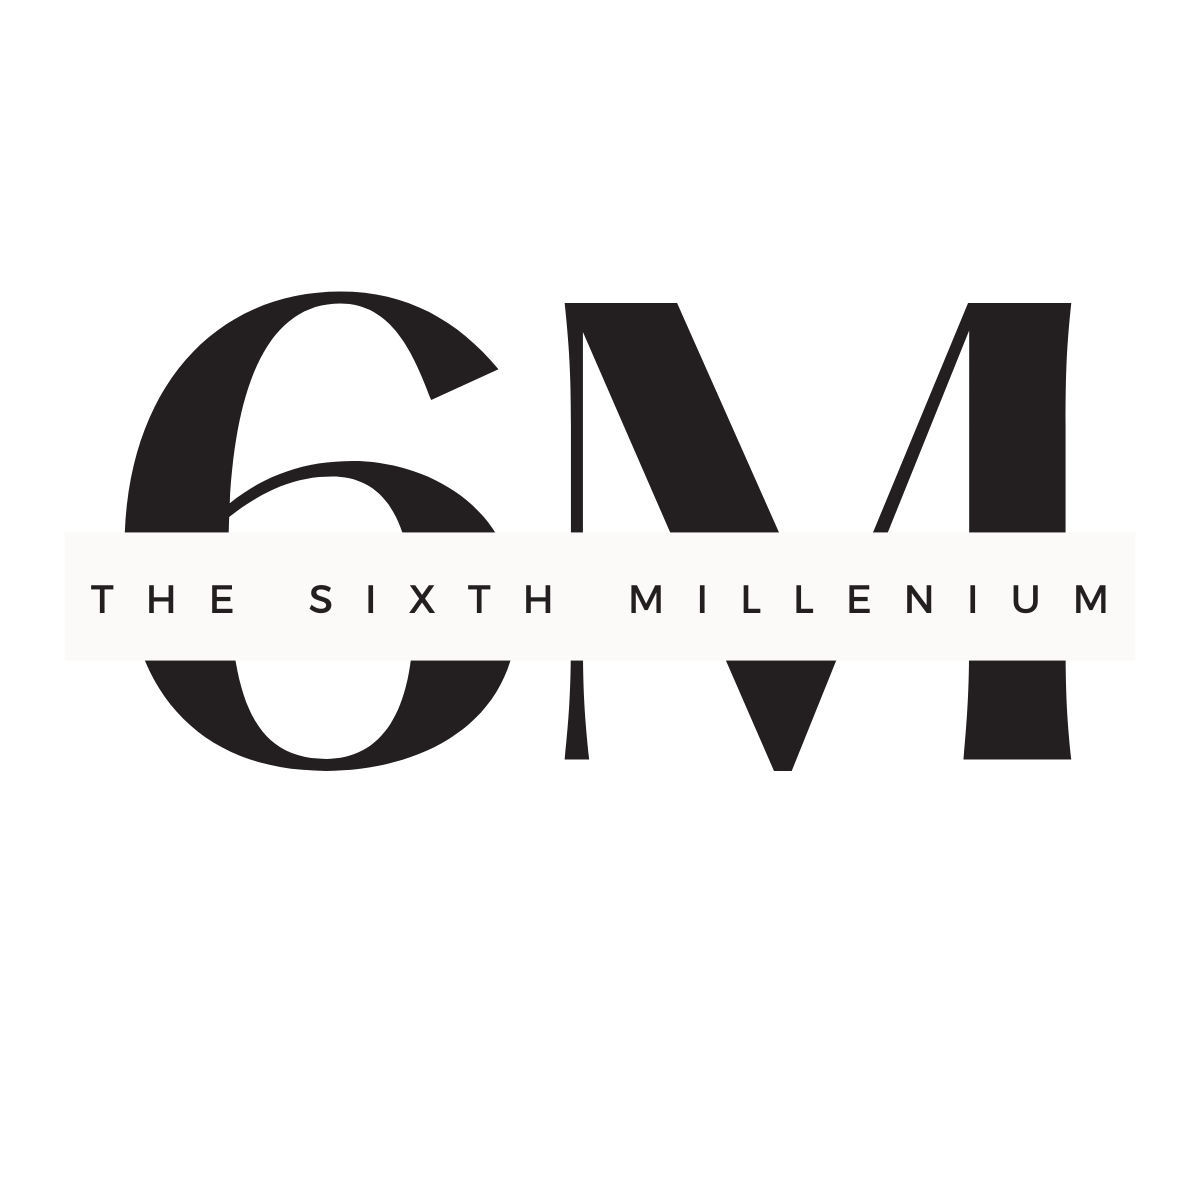 The Sixth Millennium